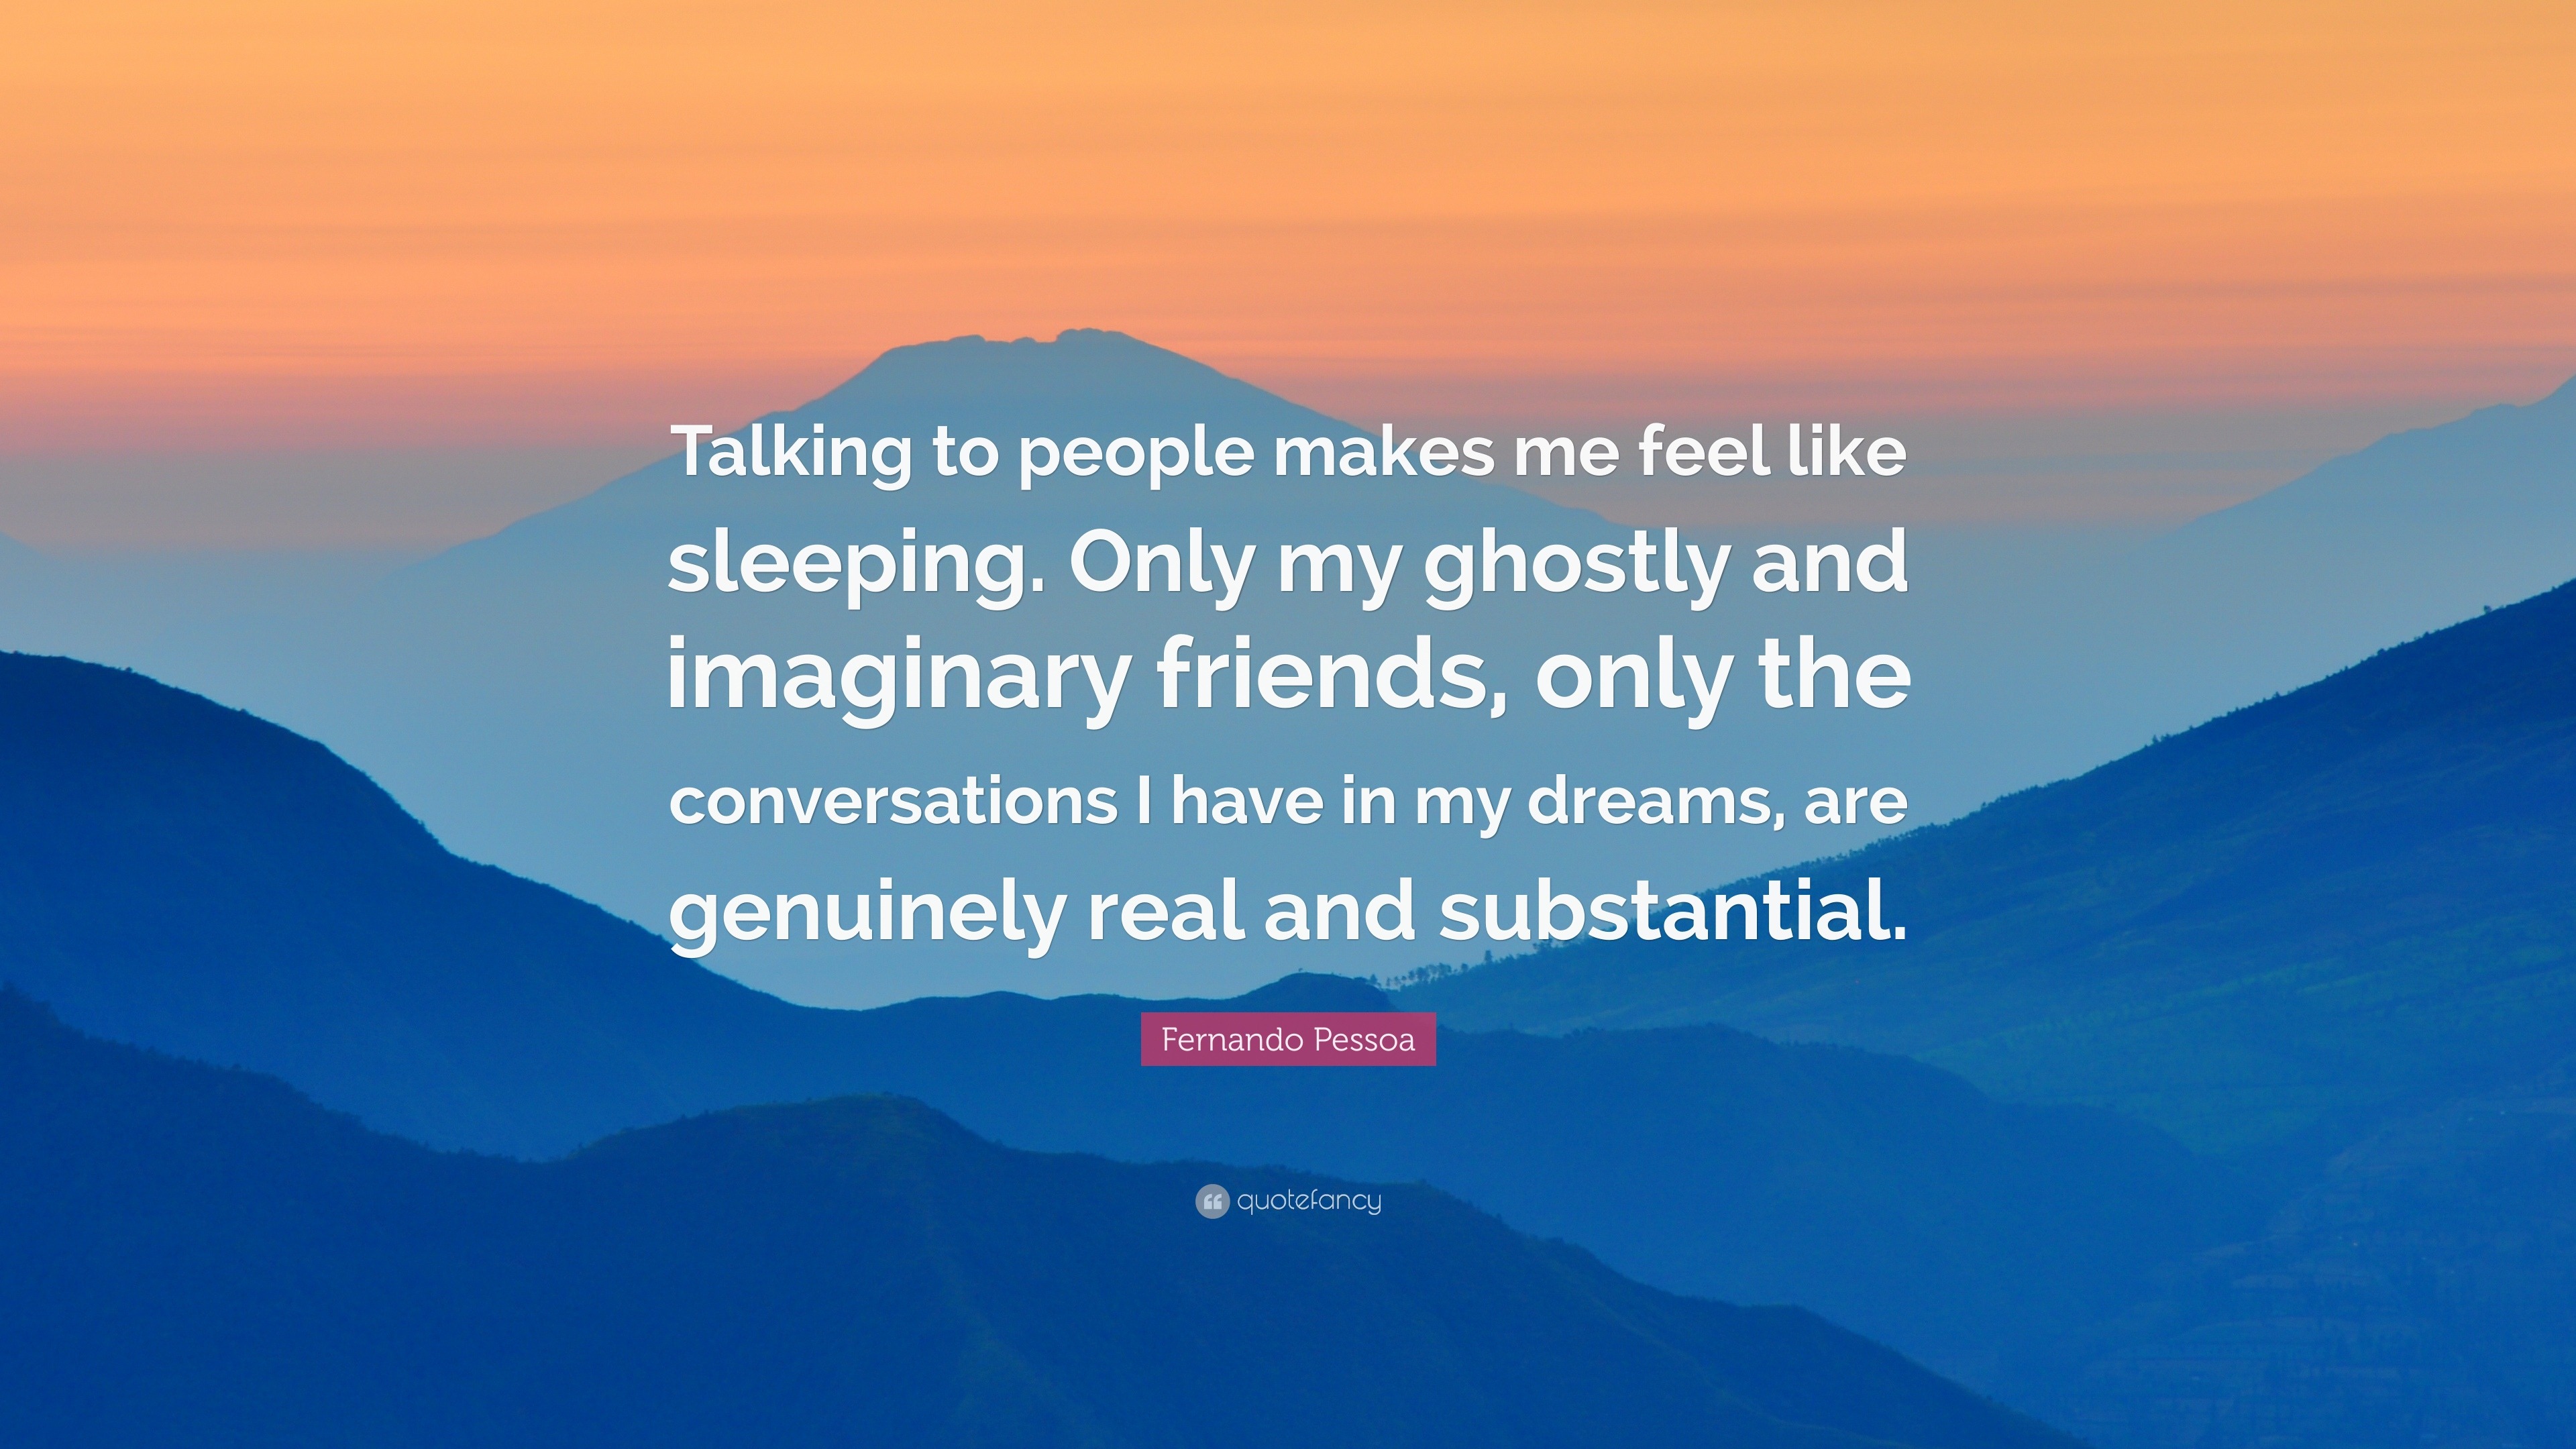 Fernando Pessoa Quote: “Talking to people makes me feel like sleeping